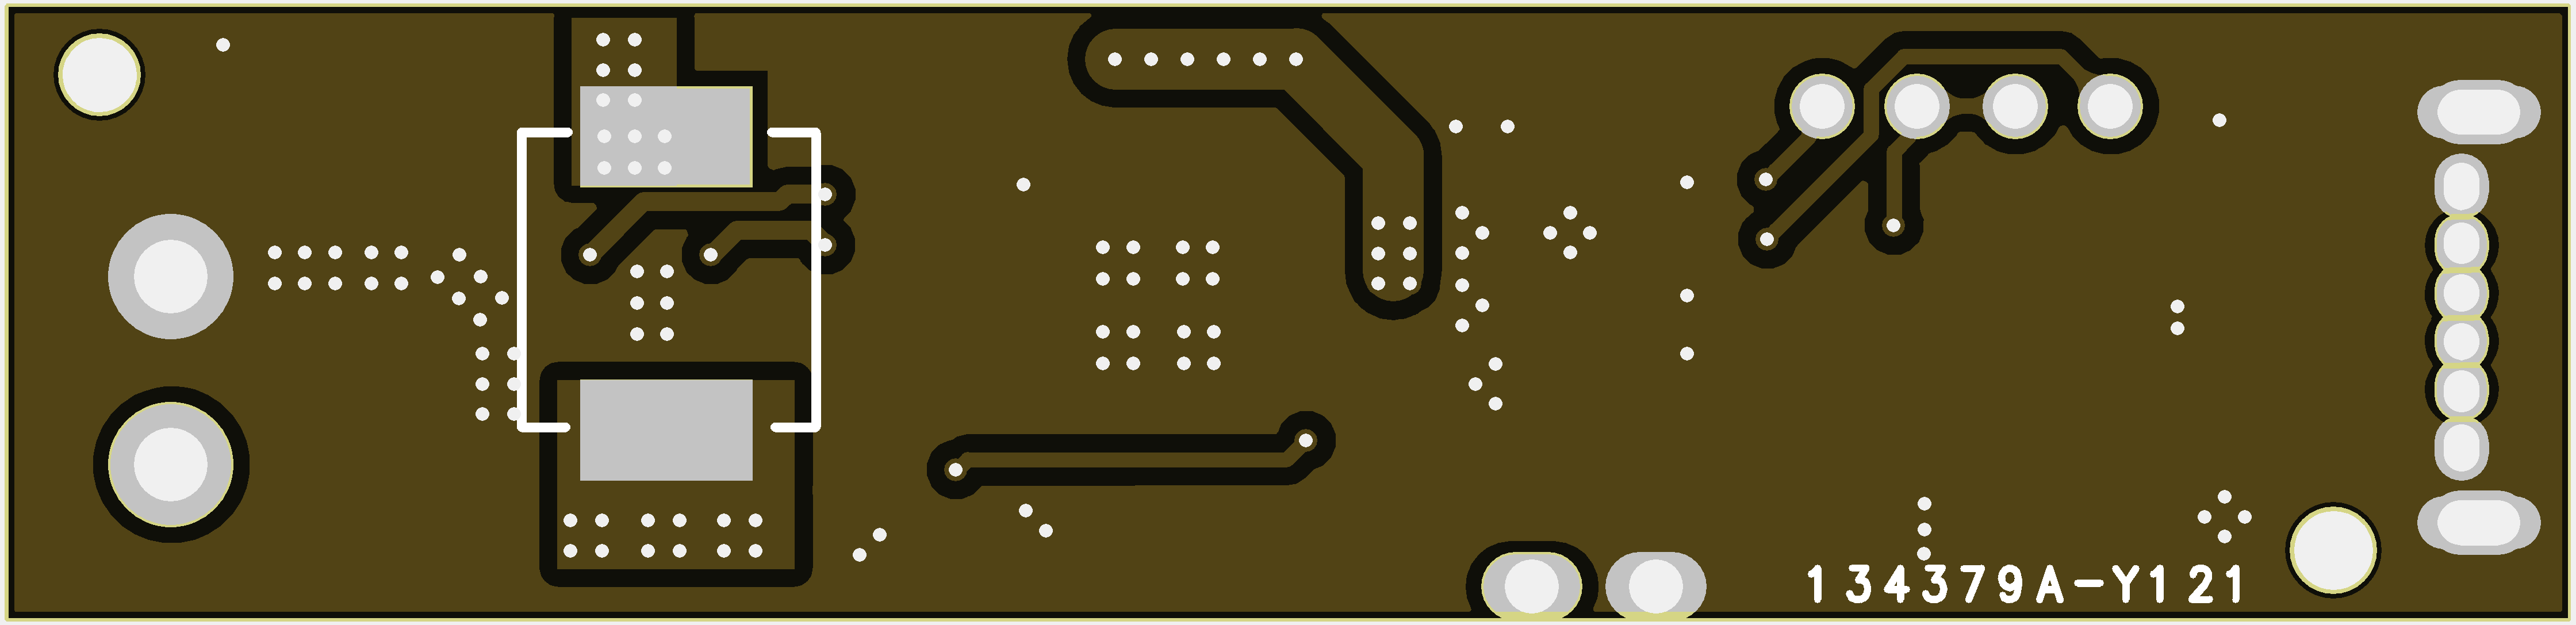 Jetson Nano平台PD电源模块PCB设计原理图2